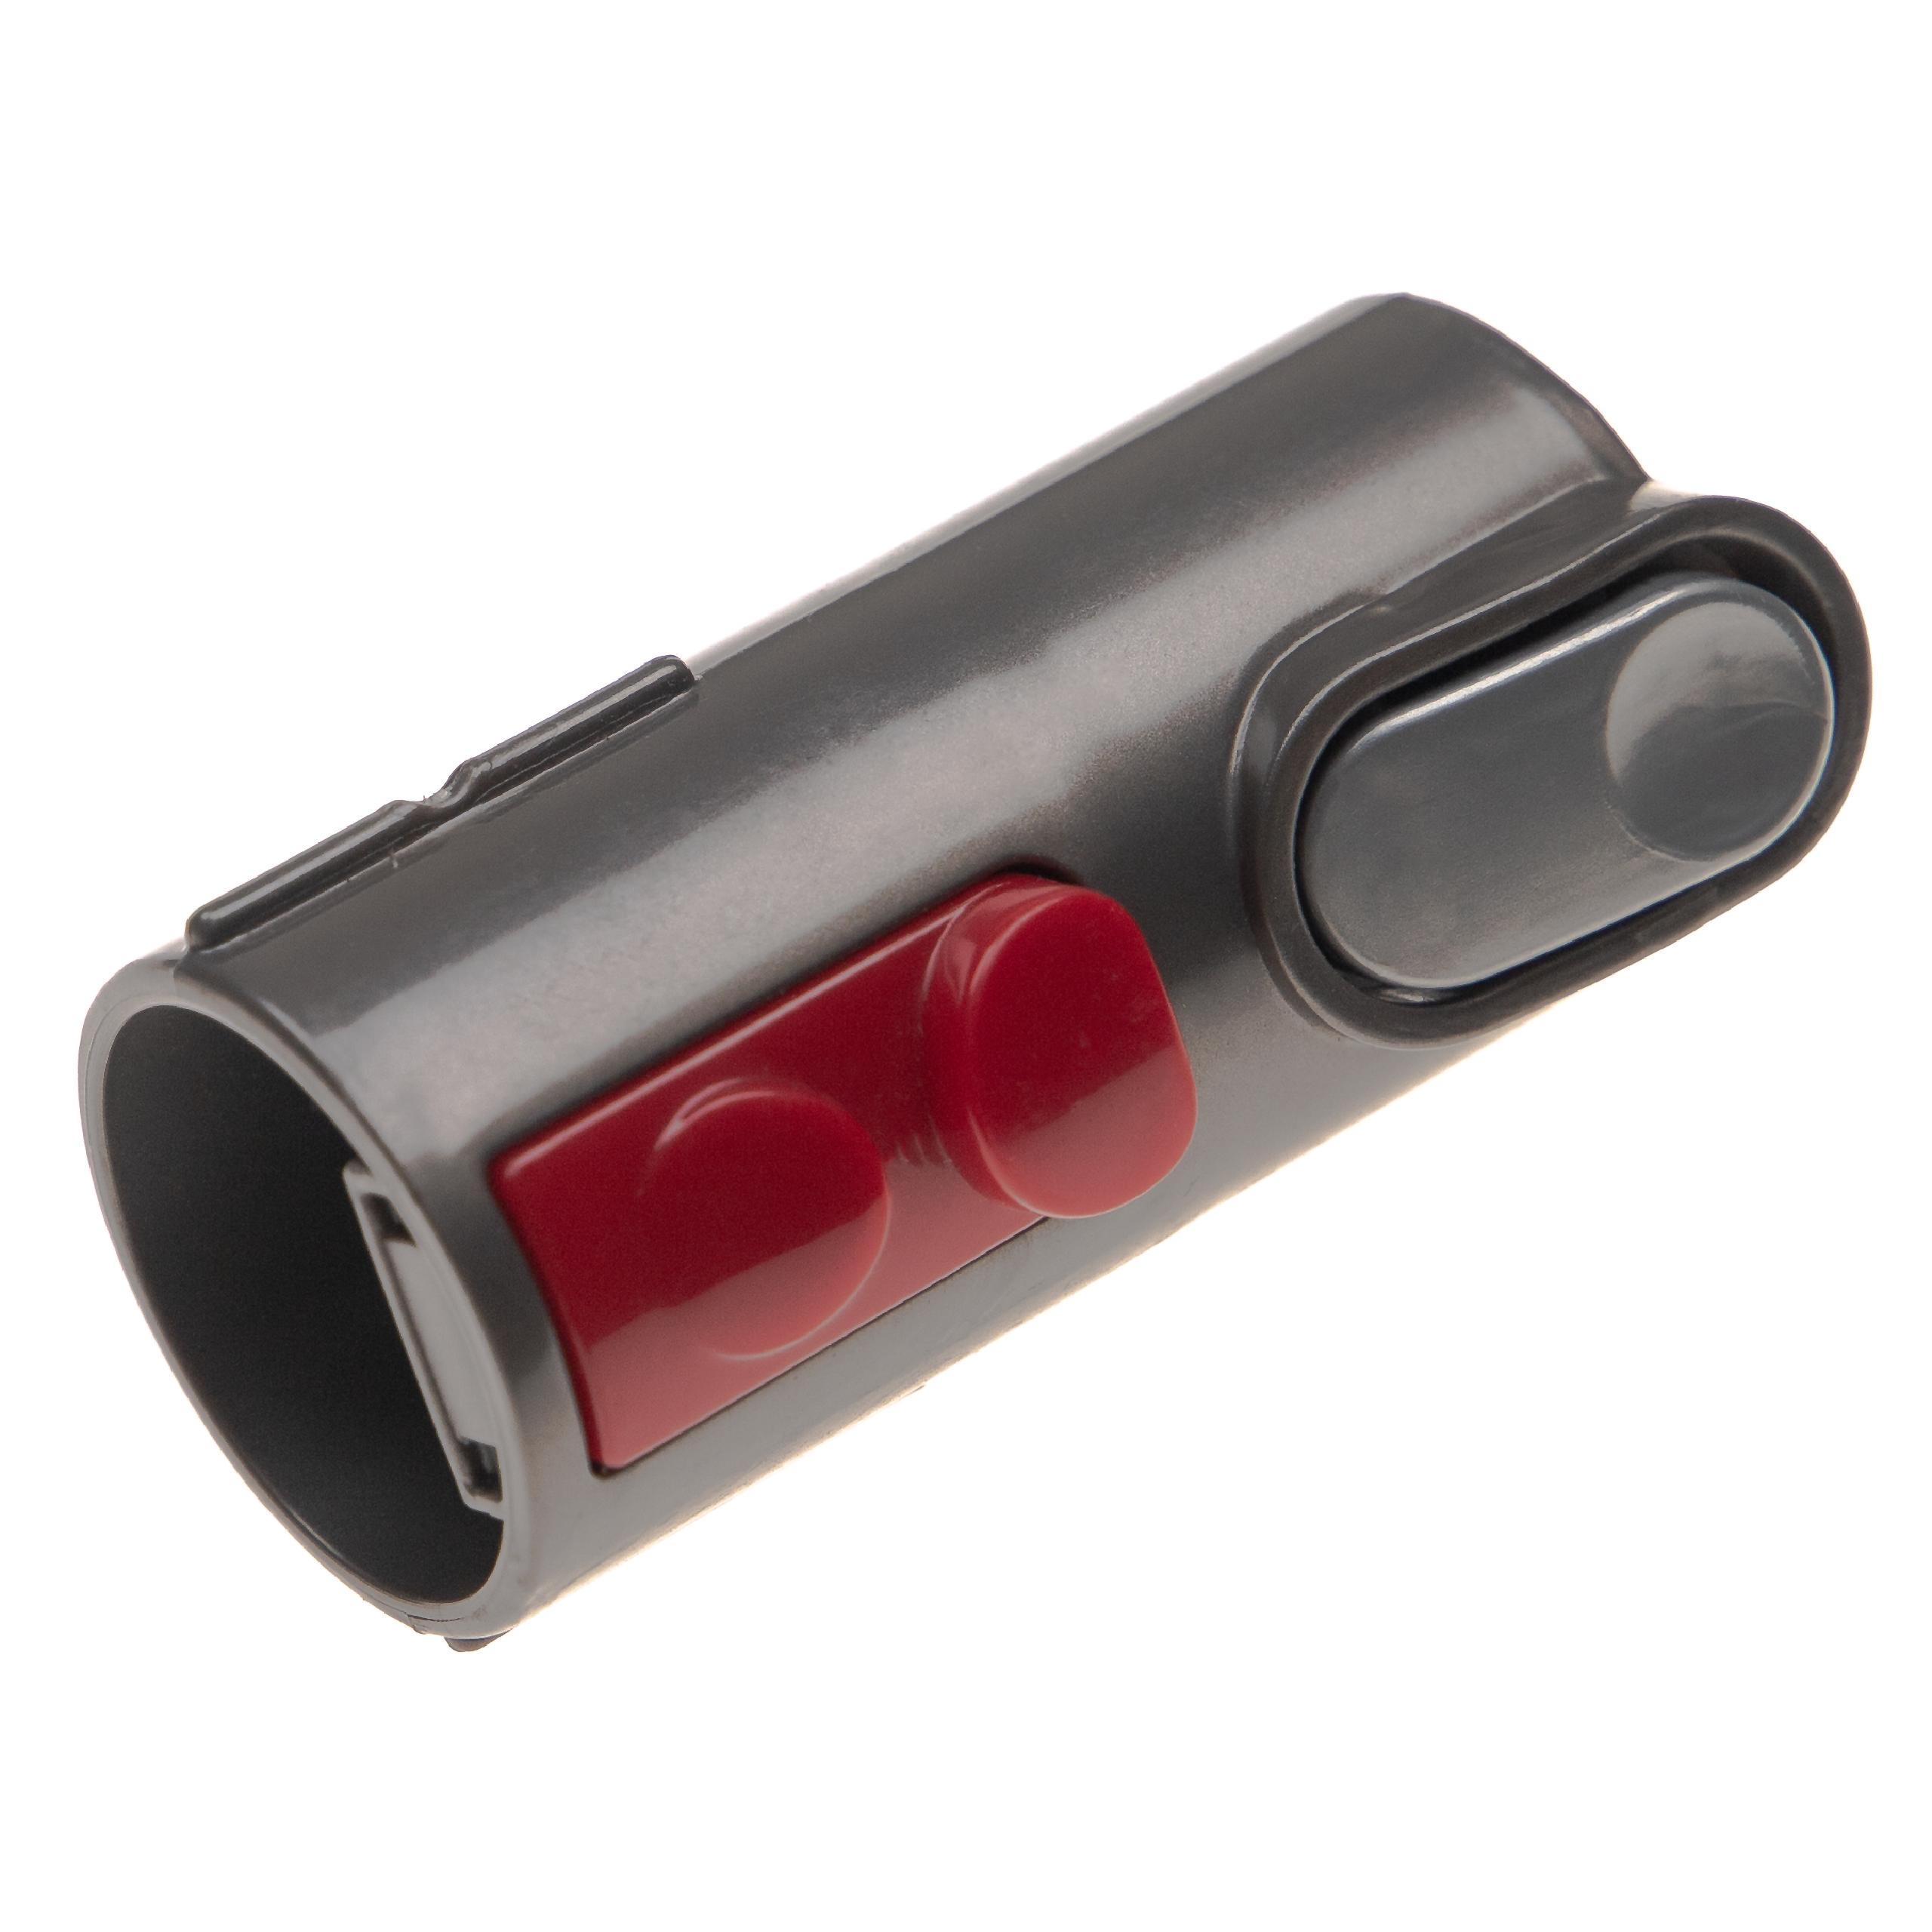 Adaptador reemplaza Dyson 967370-01 para aspiradora (retrocompatible) - negro / rojo